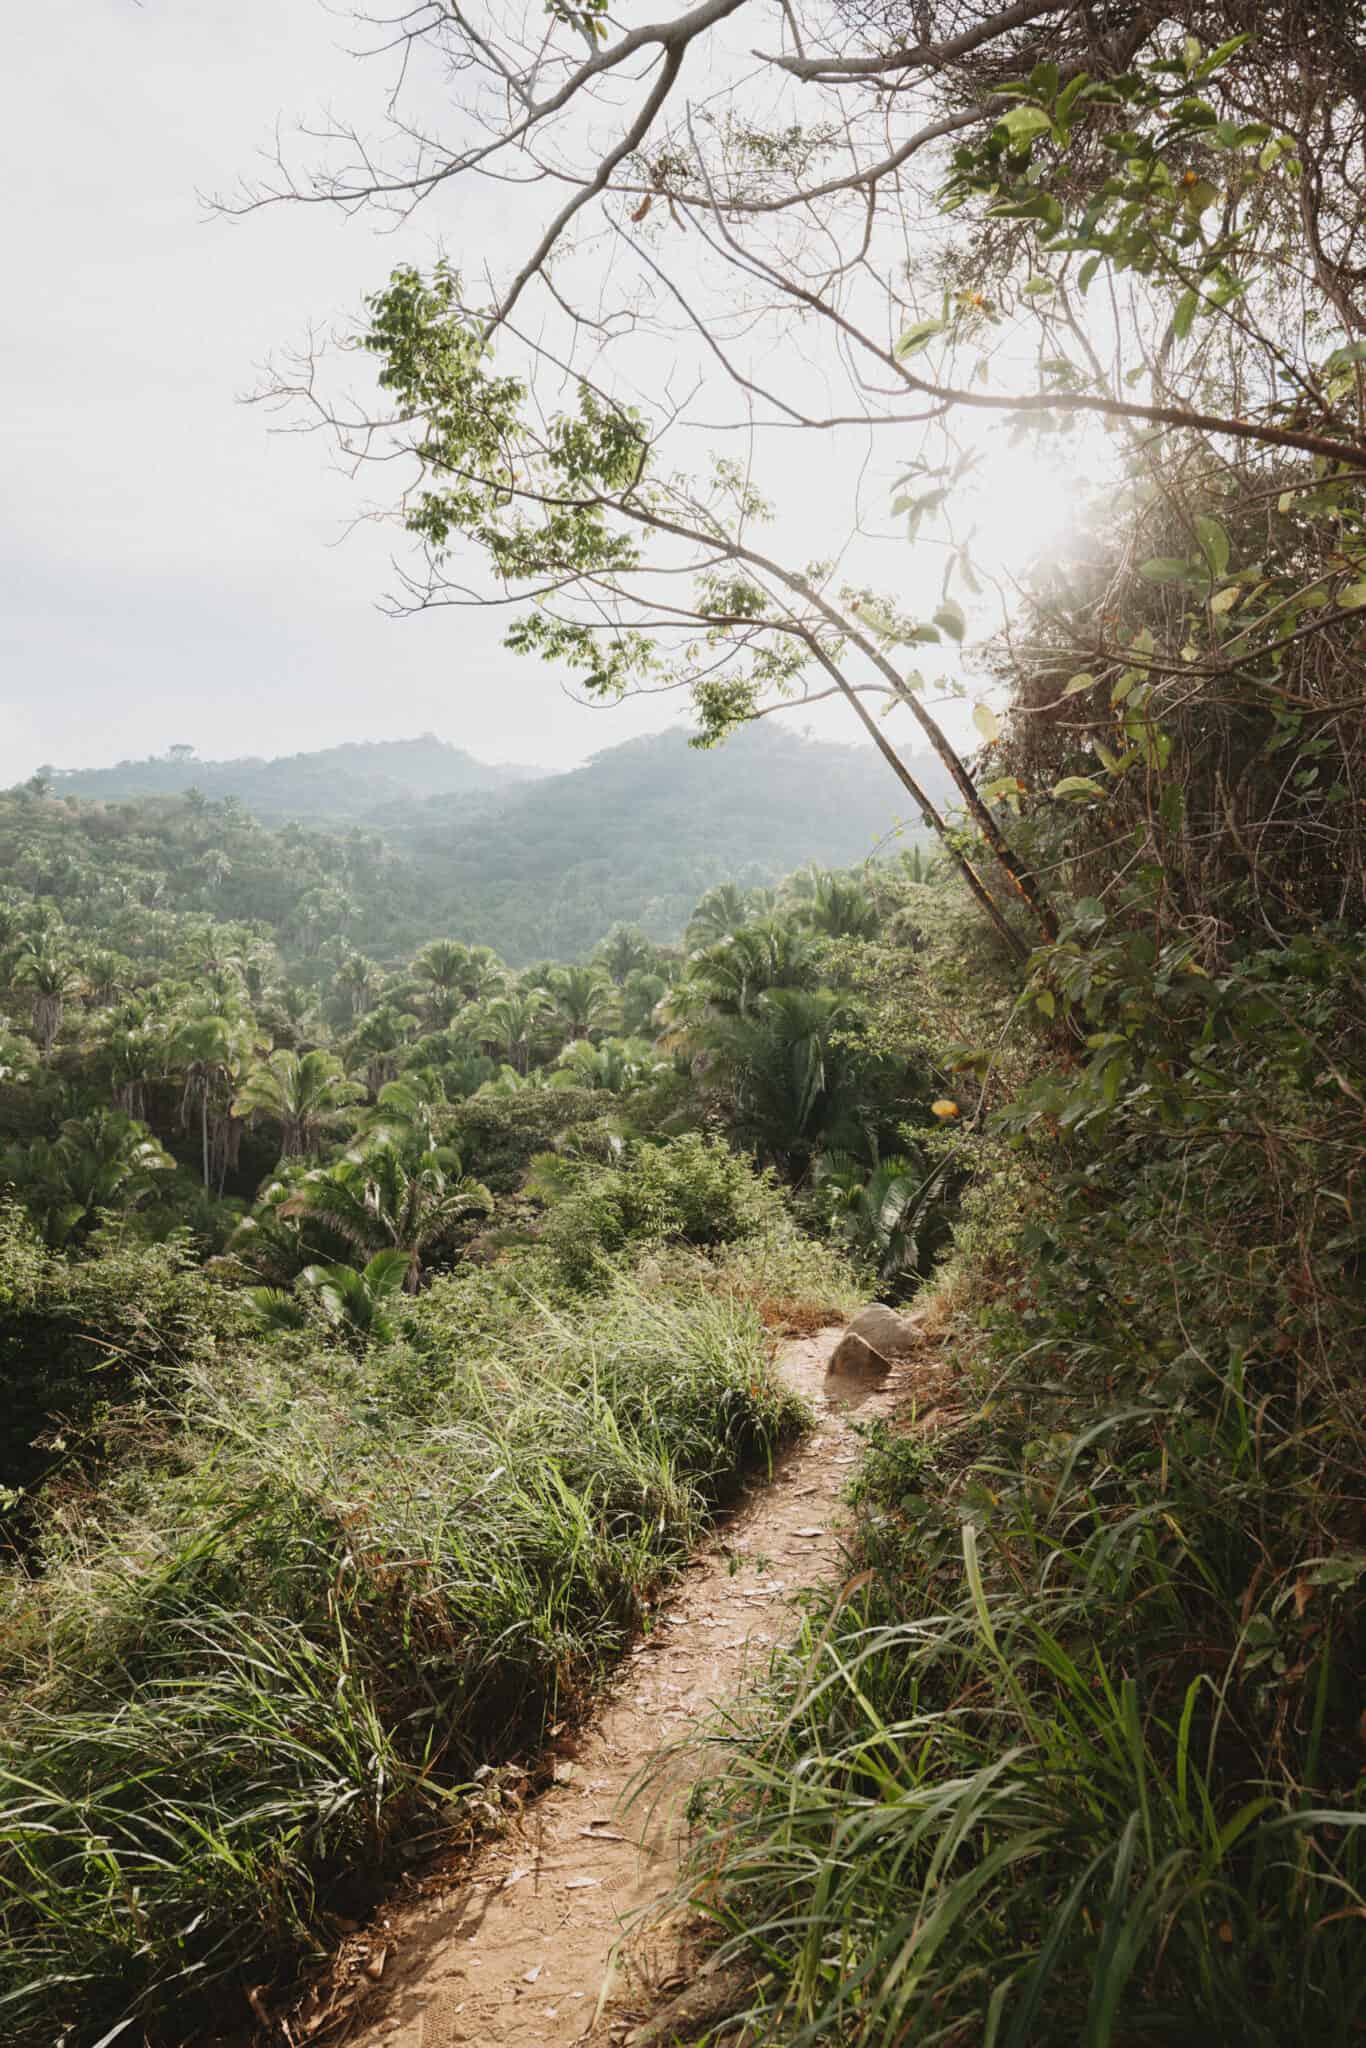 A trail leading through a lush green forest in Sayulita.